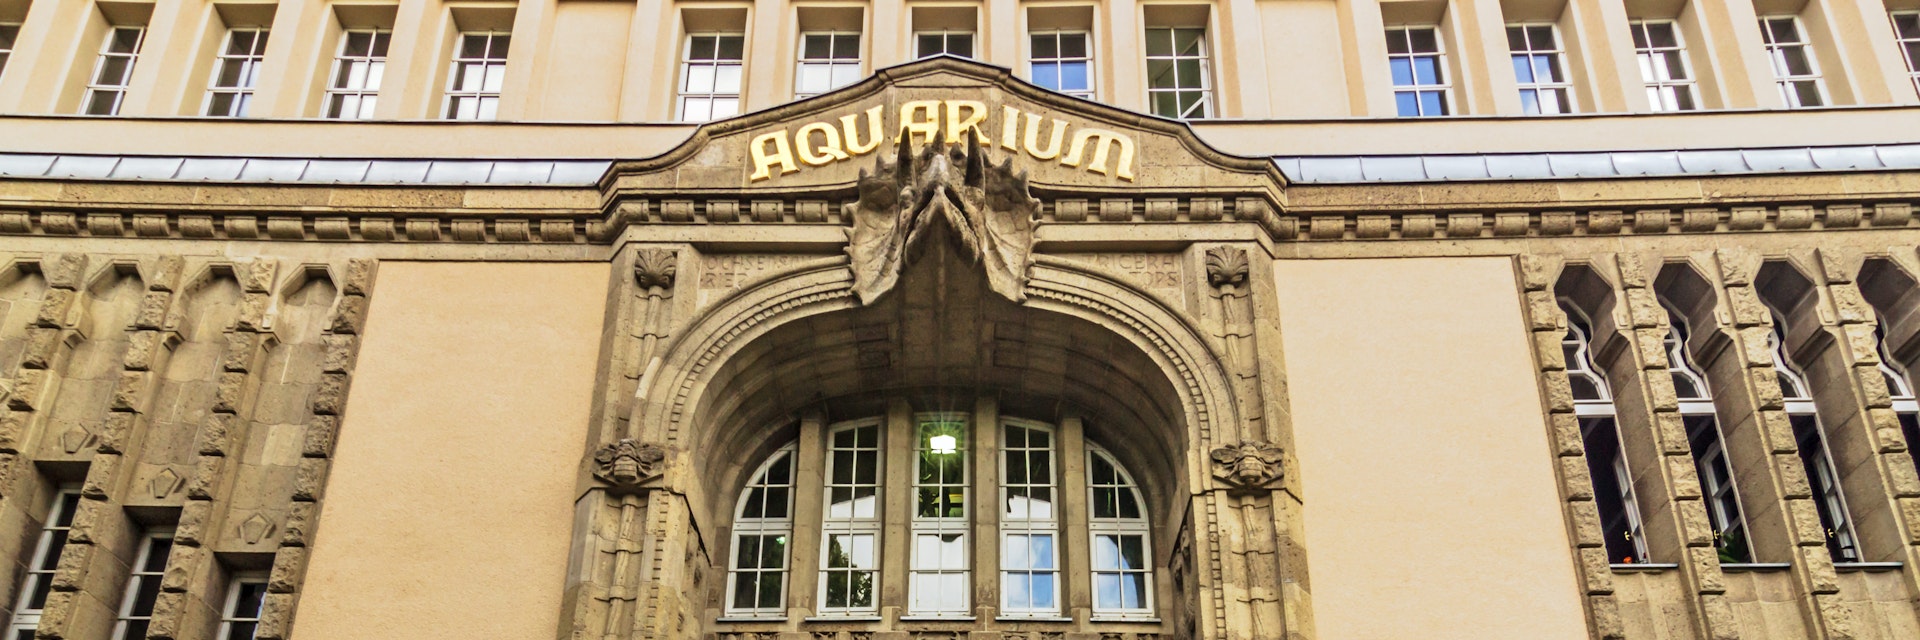 Aquarium Berlin Entrance